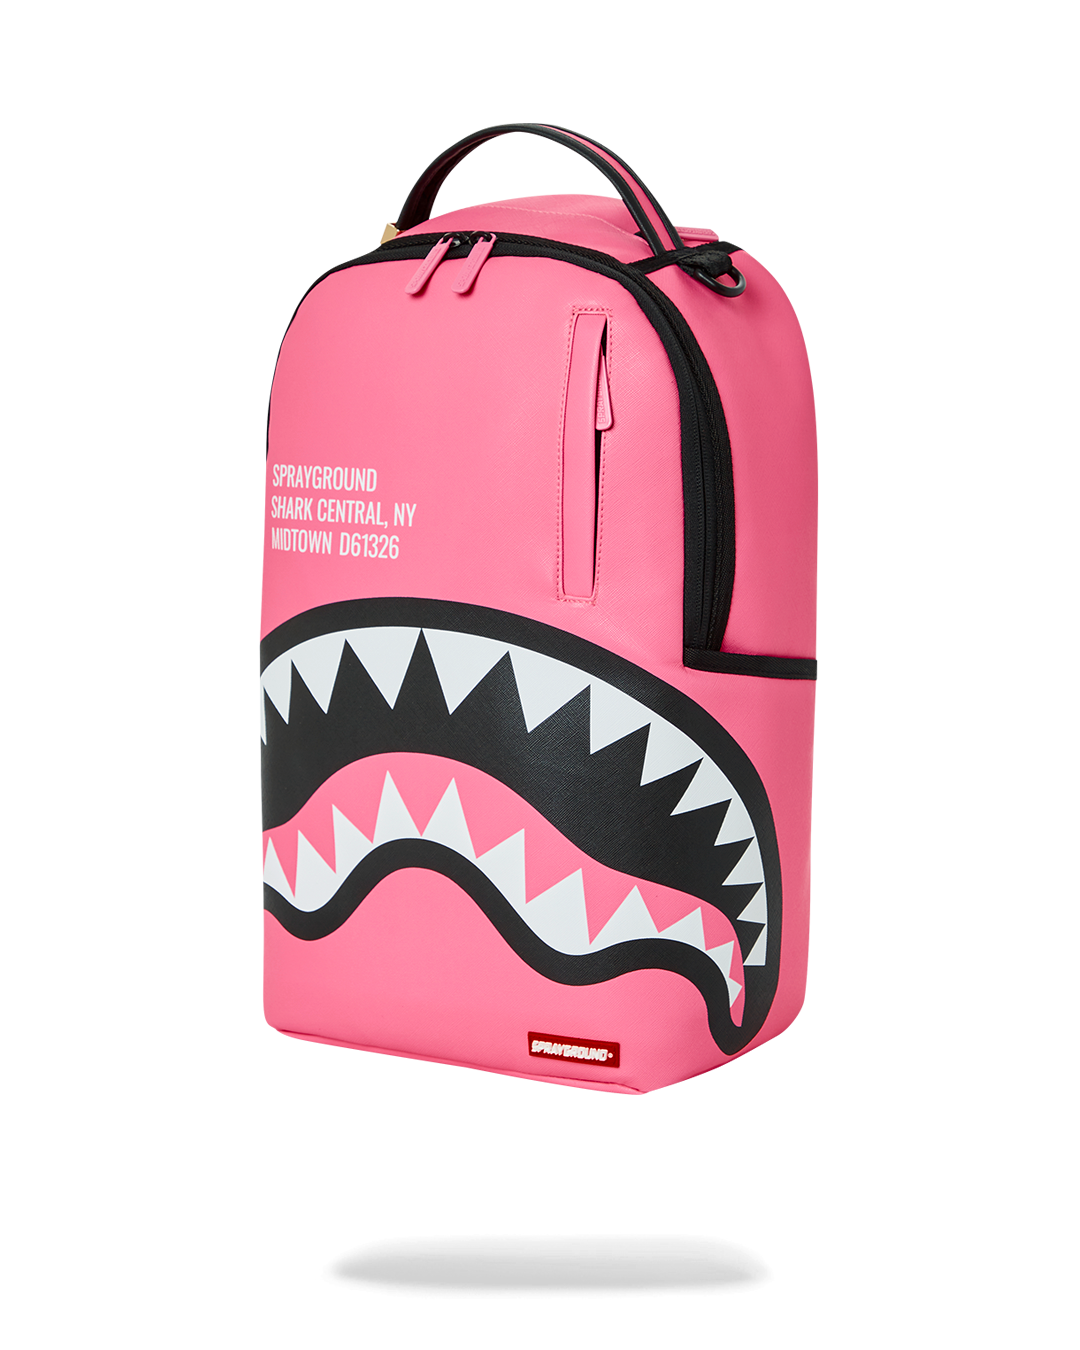 Pink Sprayground Shark Central Backpack